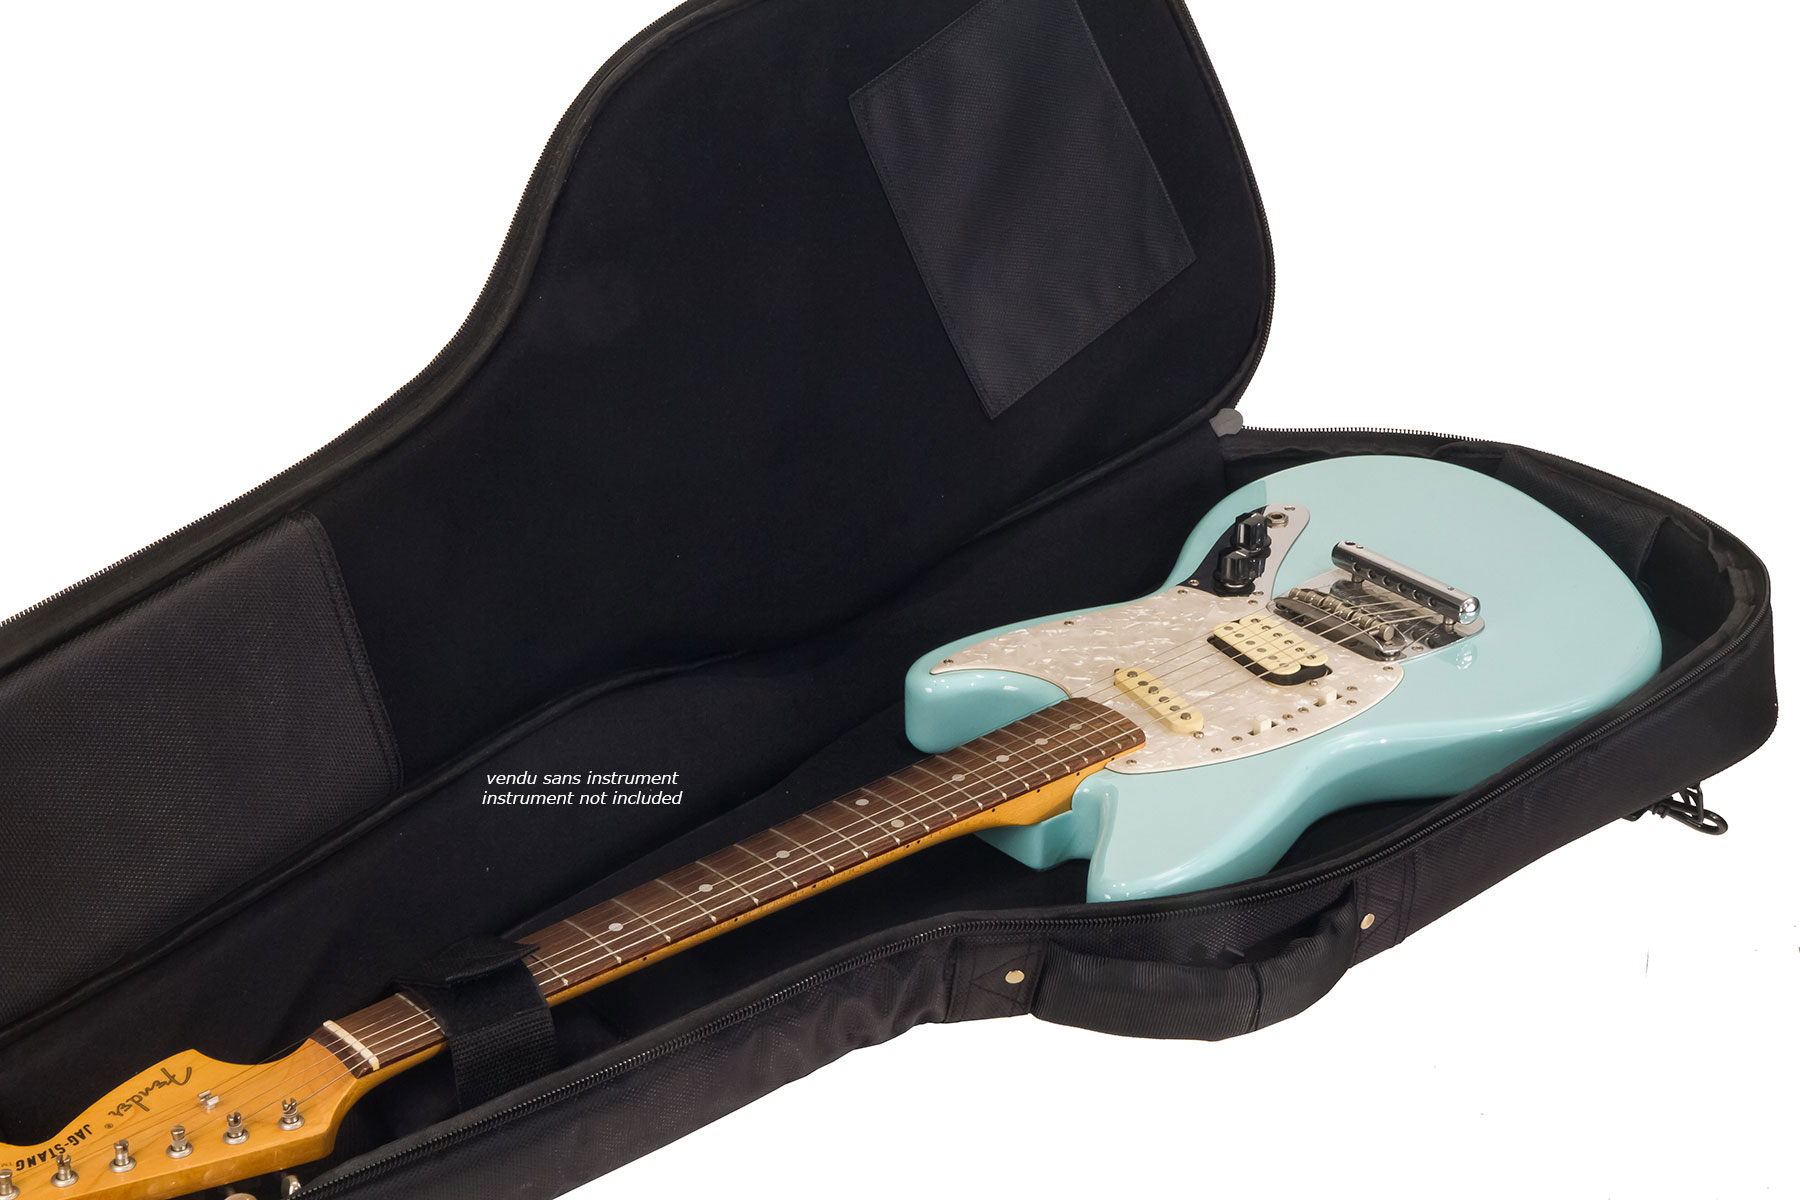 X-tone 2020 Ele-bk Light Deluxe Electric Guitar Bag Black (2083) - Bolsa para guitarra eléctrica - Variation 5